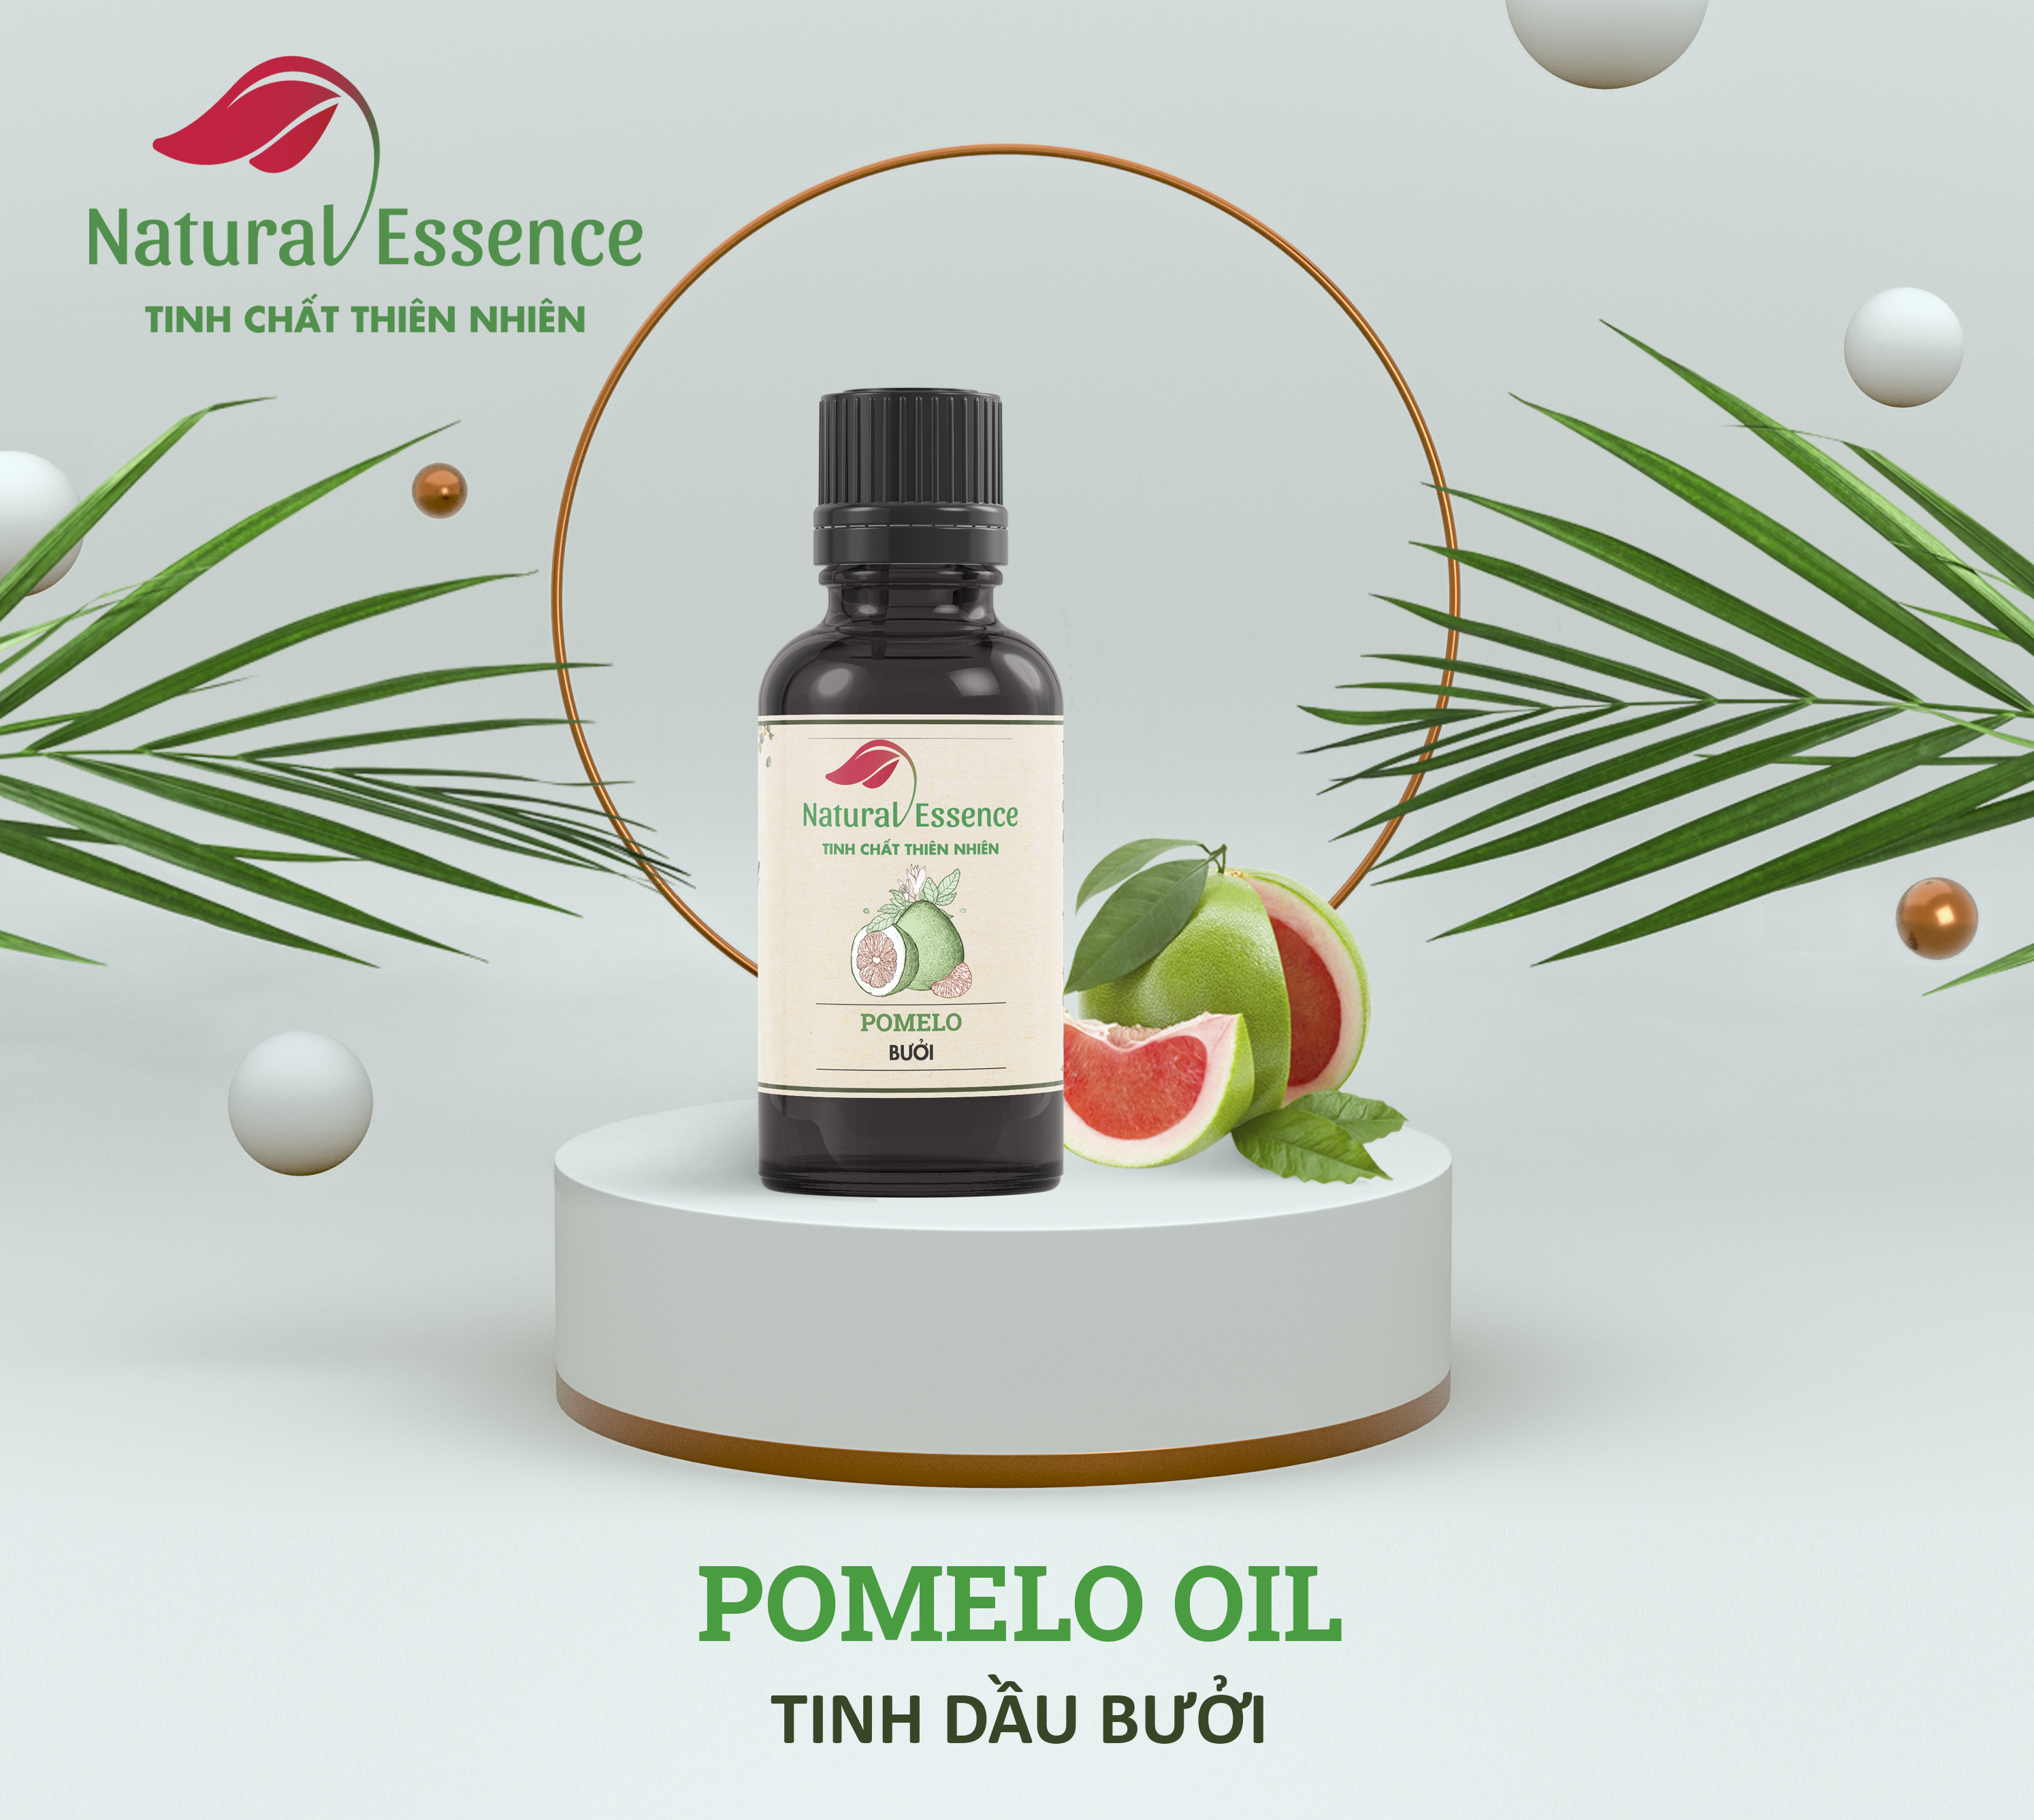 Pomelo-essential-oil-tinh-dau-buoi-natural-essence-tinh-chat-thien-nhien